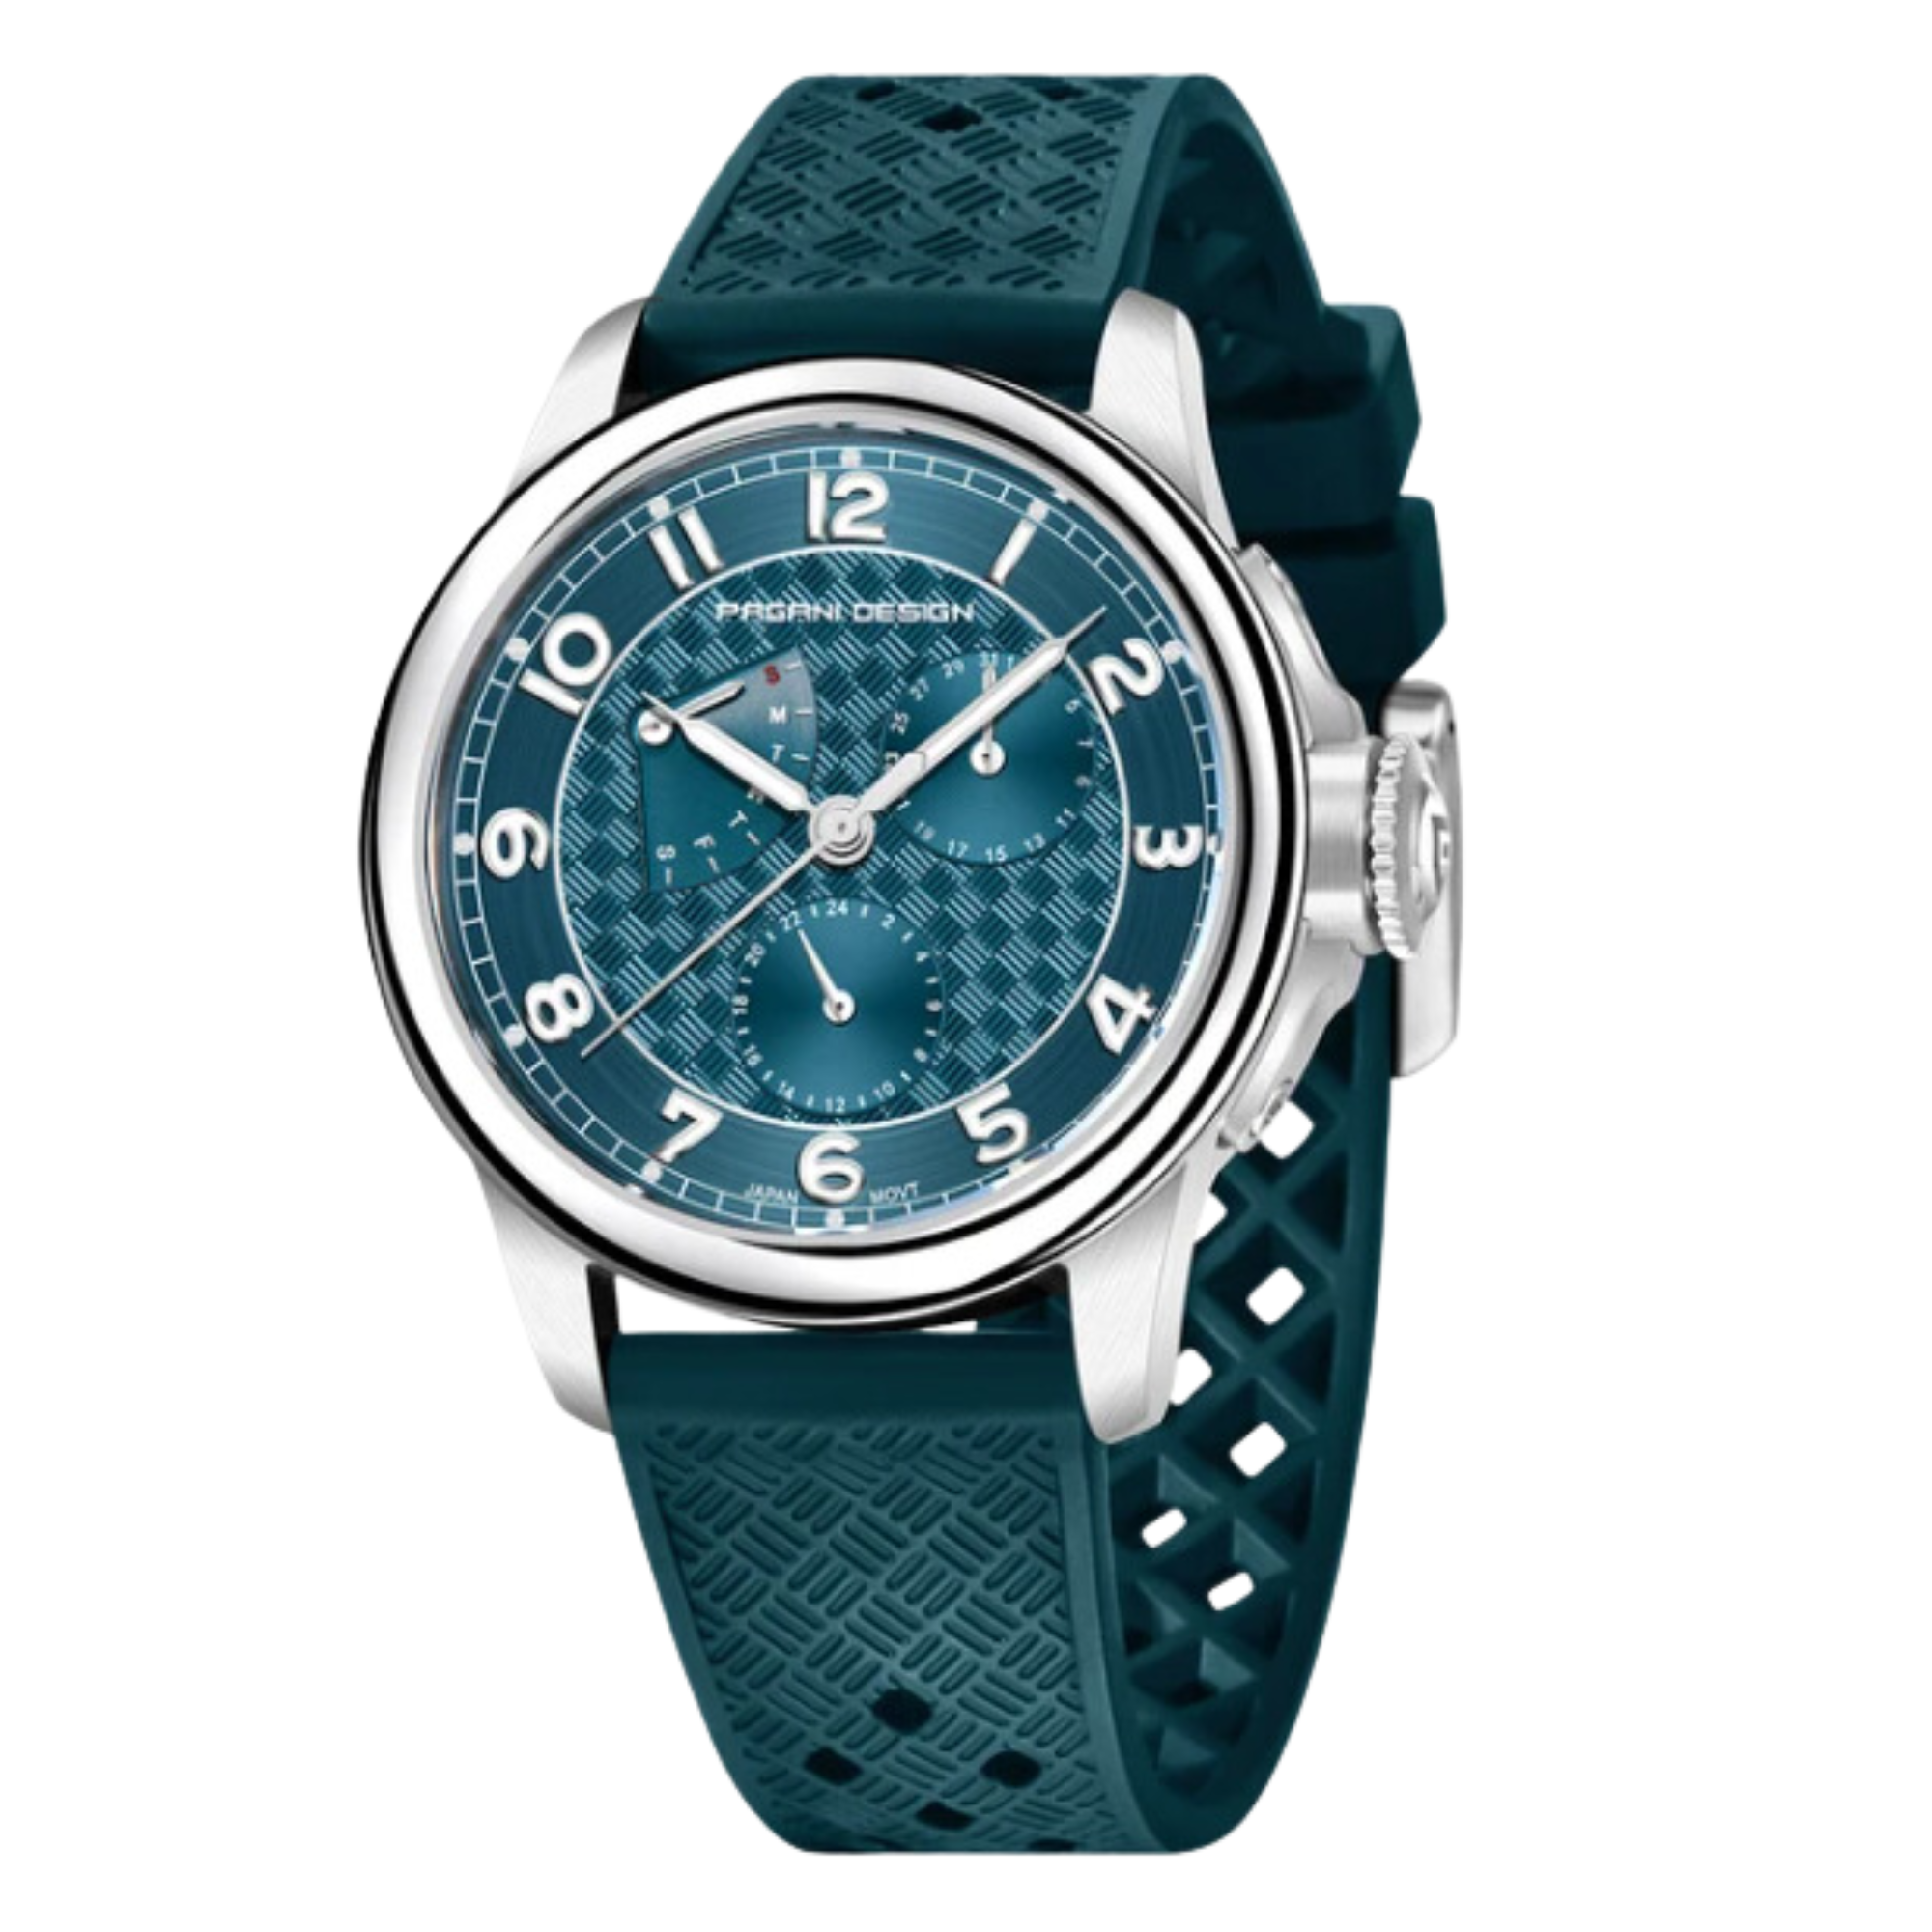 Pagani Design PD-1780 Japanese Quartz Movement Wristwatch with Sapphire Crystal Calendar New 24 Hours 100M Waterproof Watch - Sea Blue/Green Dial